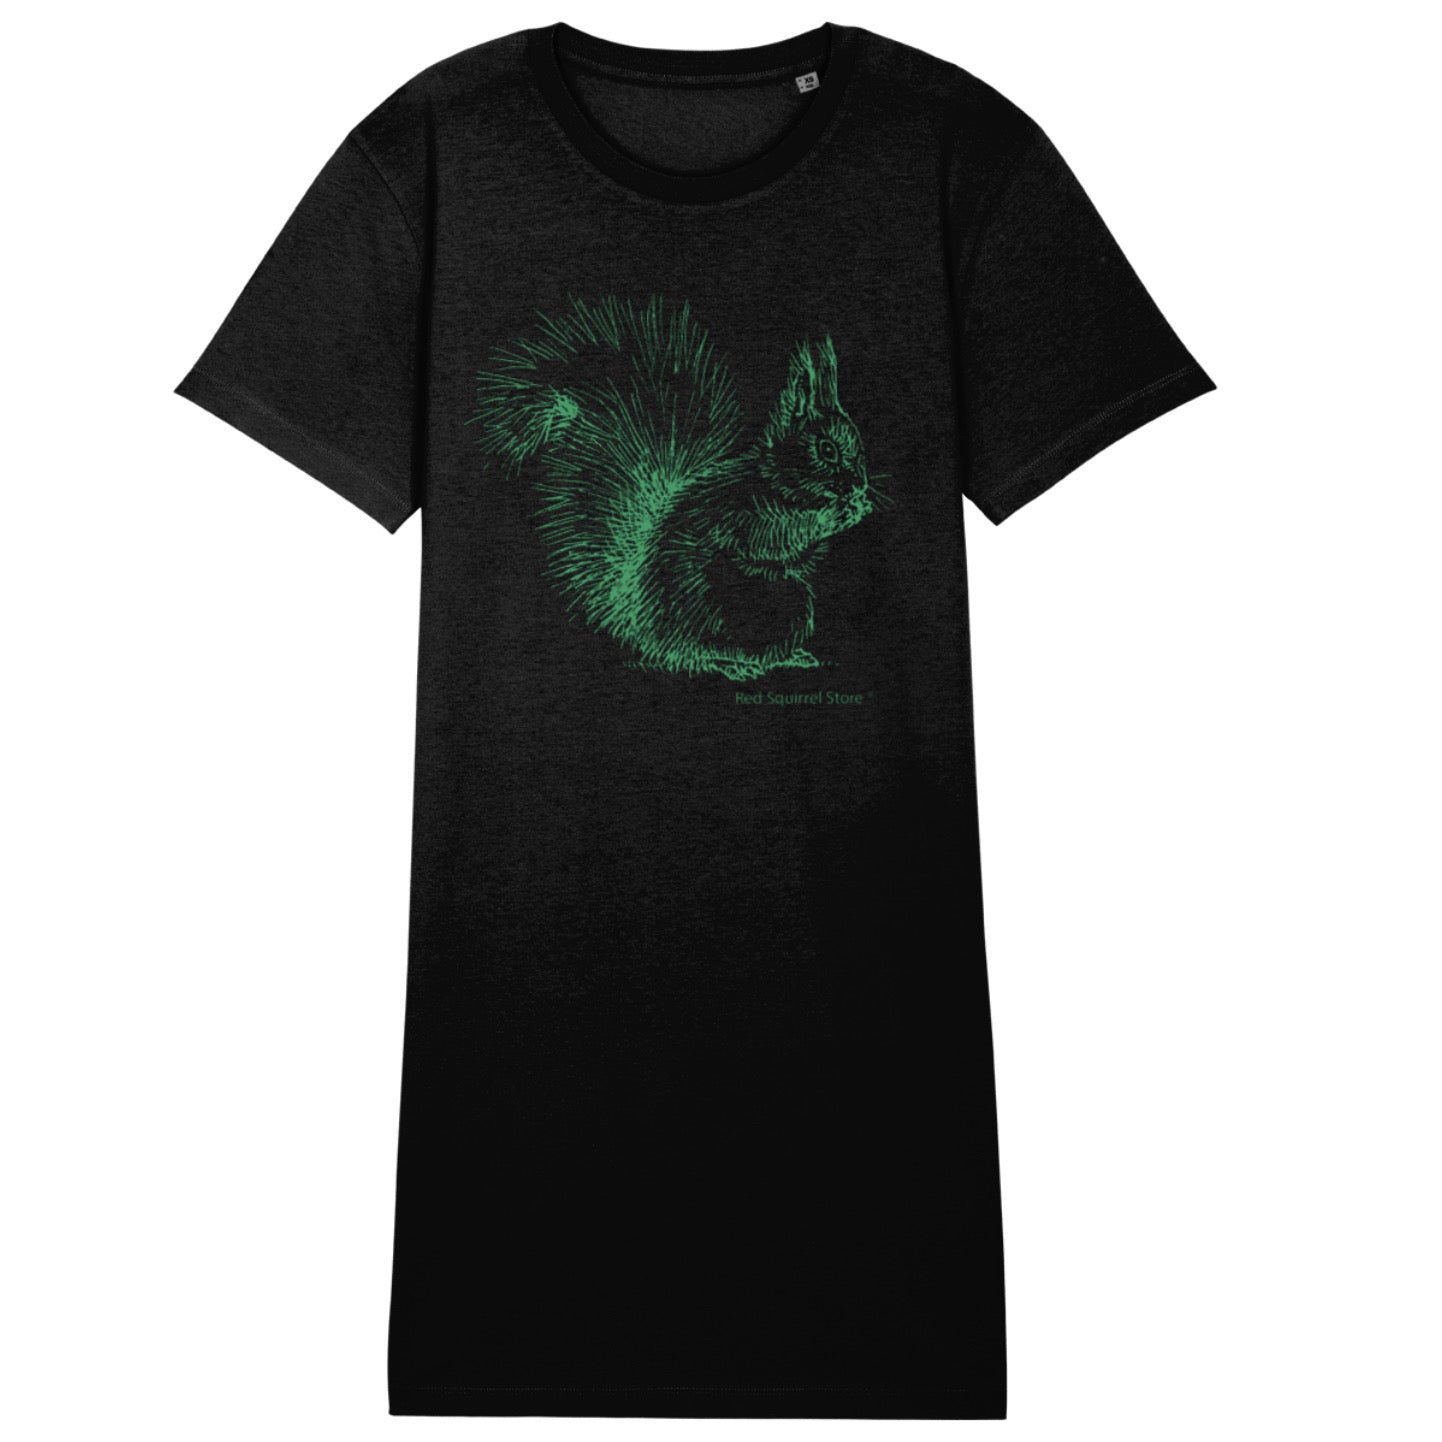 Organic T-shirt Dress Black with Green Squirrel